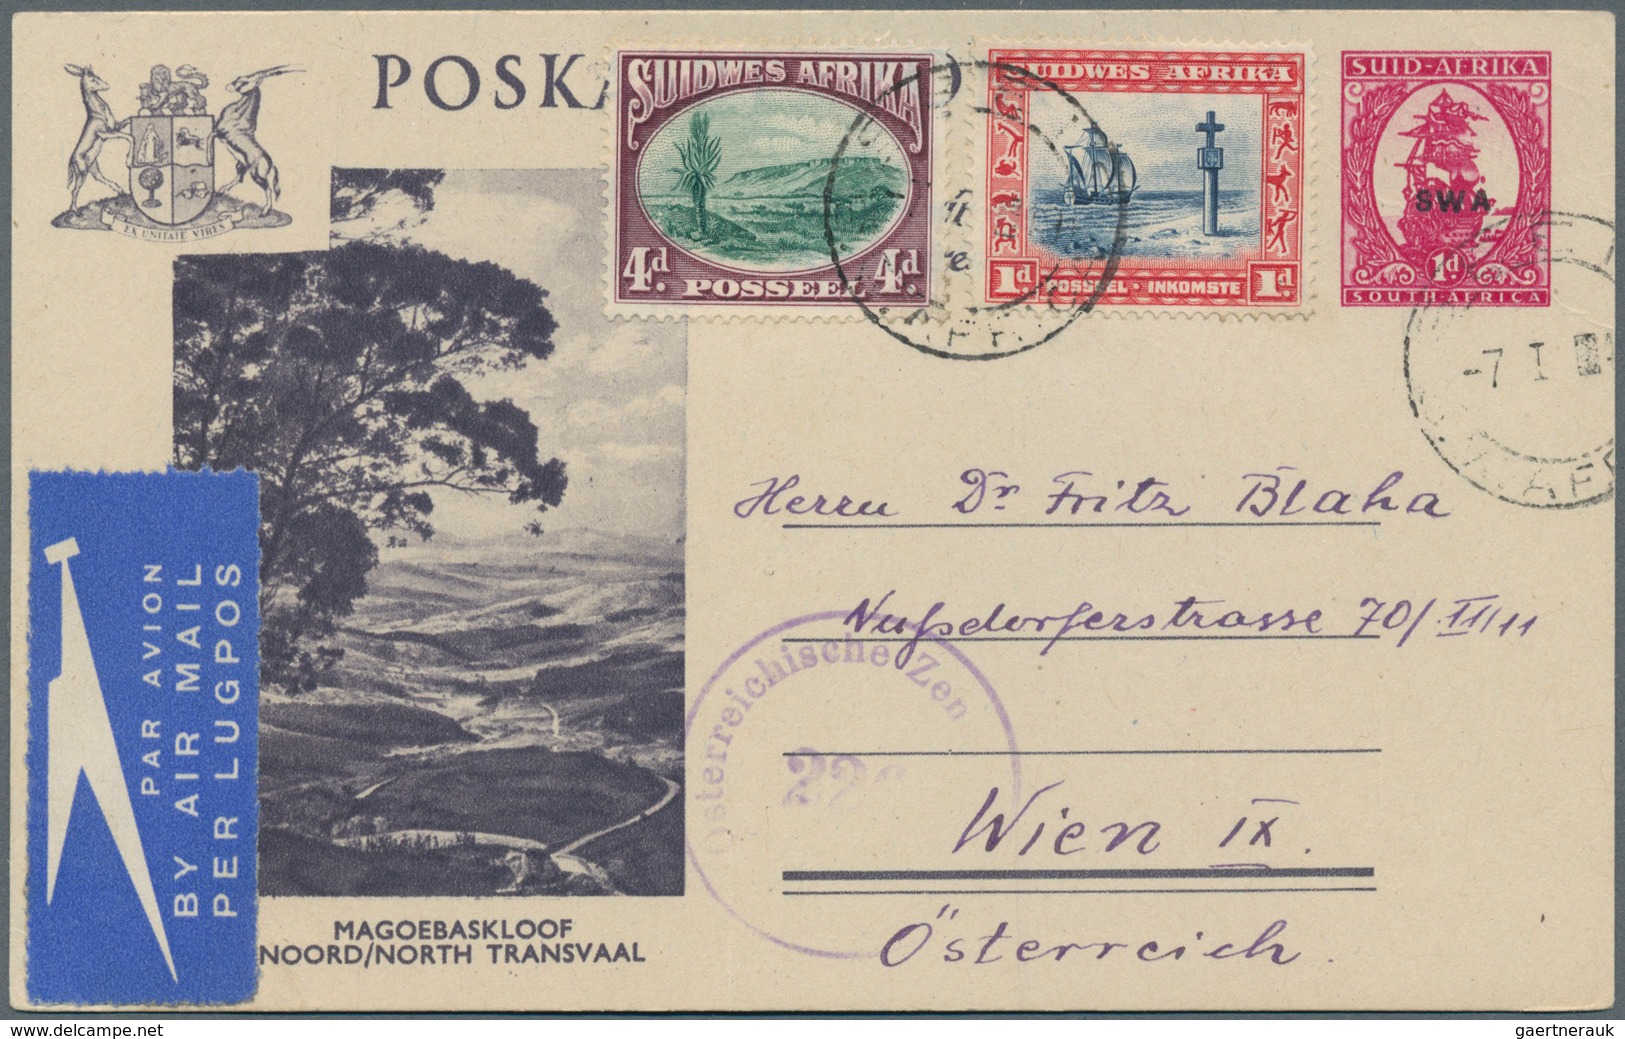 Südwestafrika: 1924/1965 (ca.), POSTAL STATIONERY: accumulation with about 85 used postal stationeri